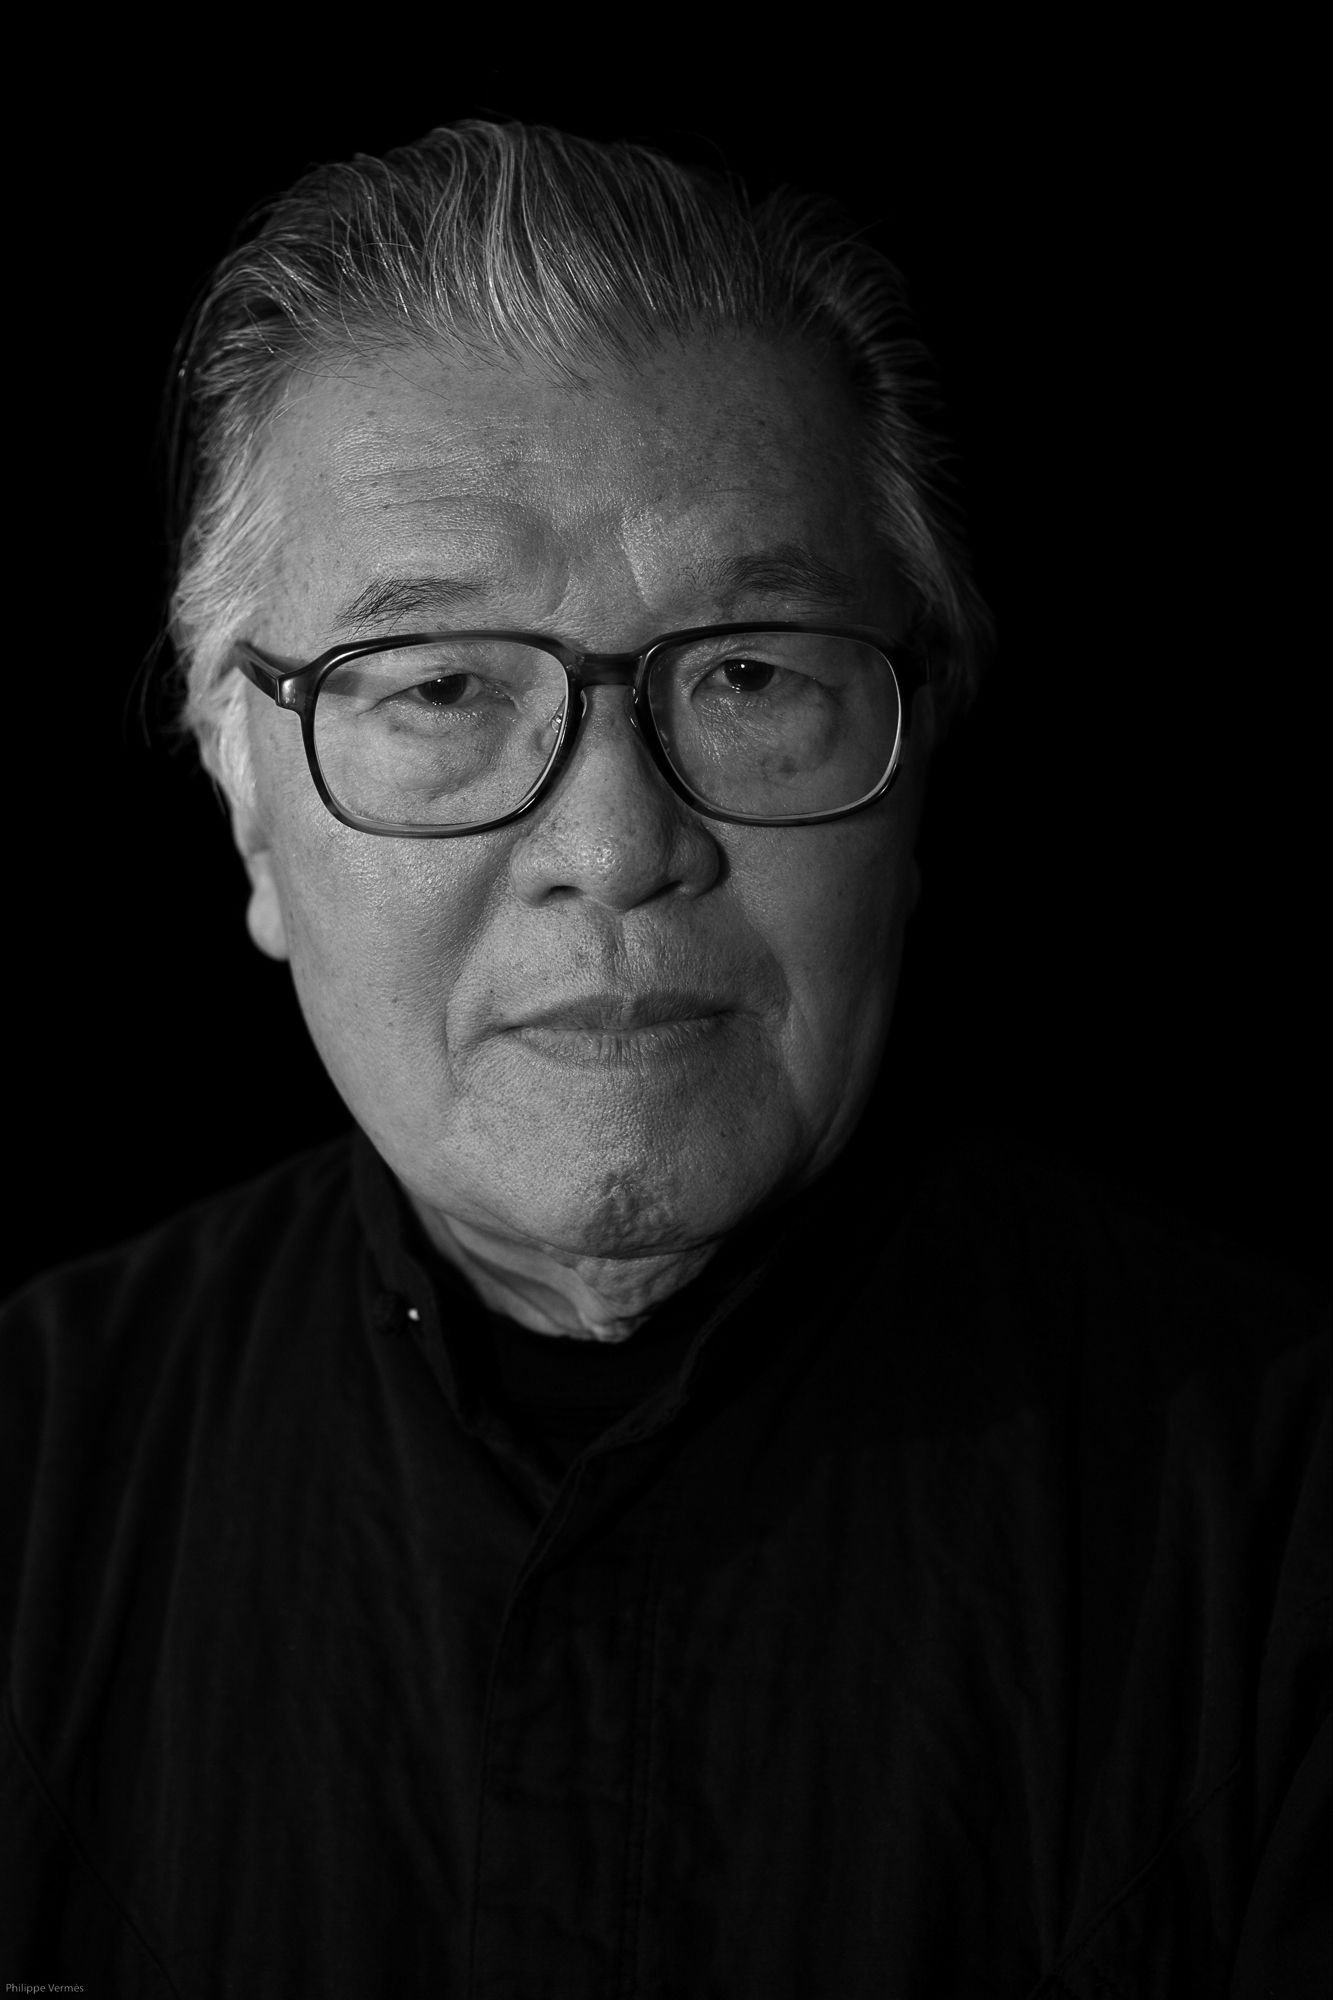 Yasuhiro (Hiro) Wakabayashi